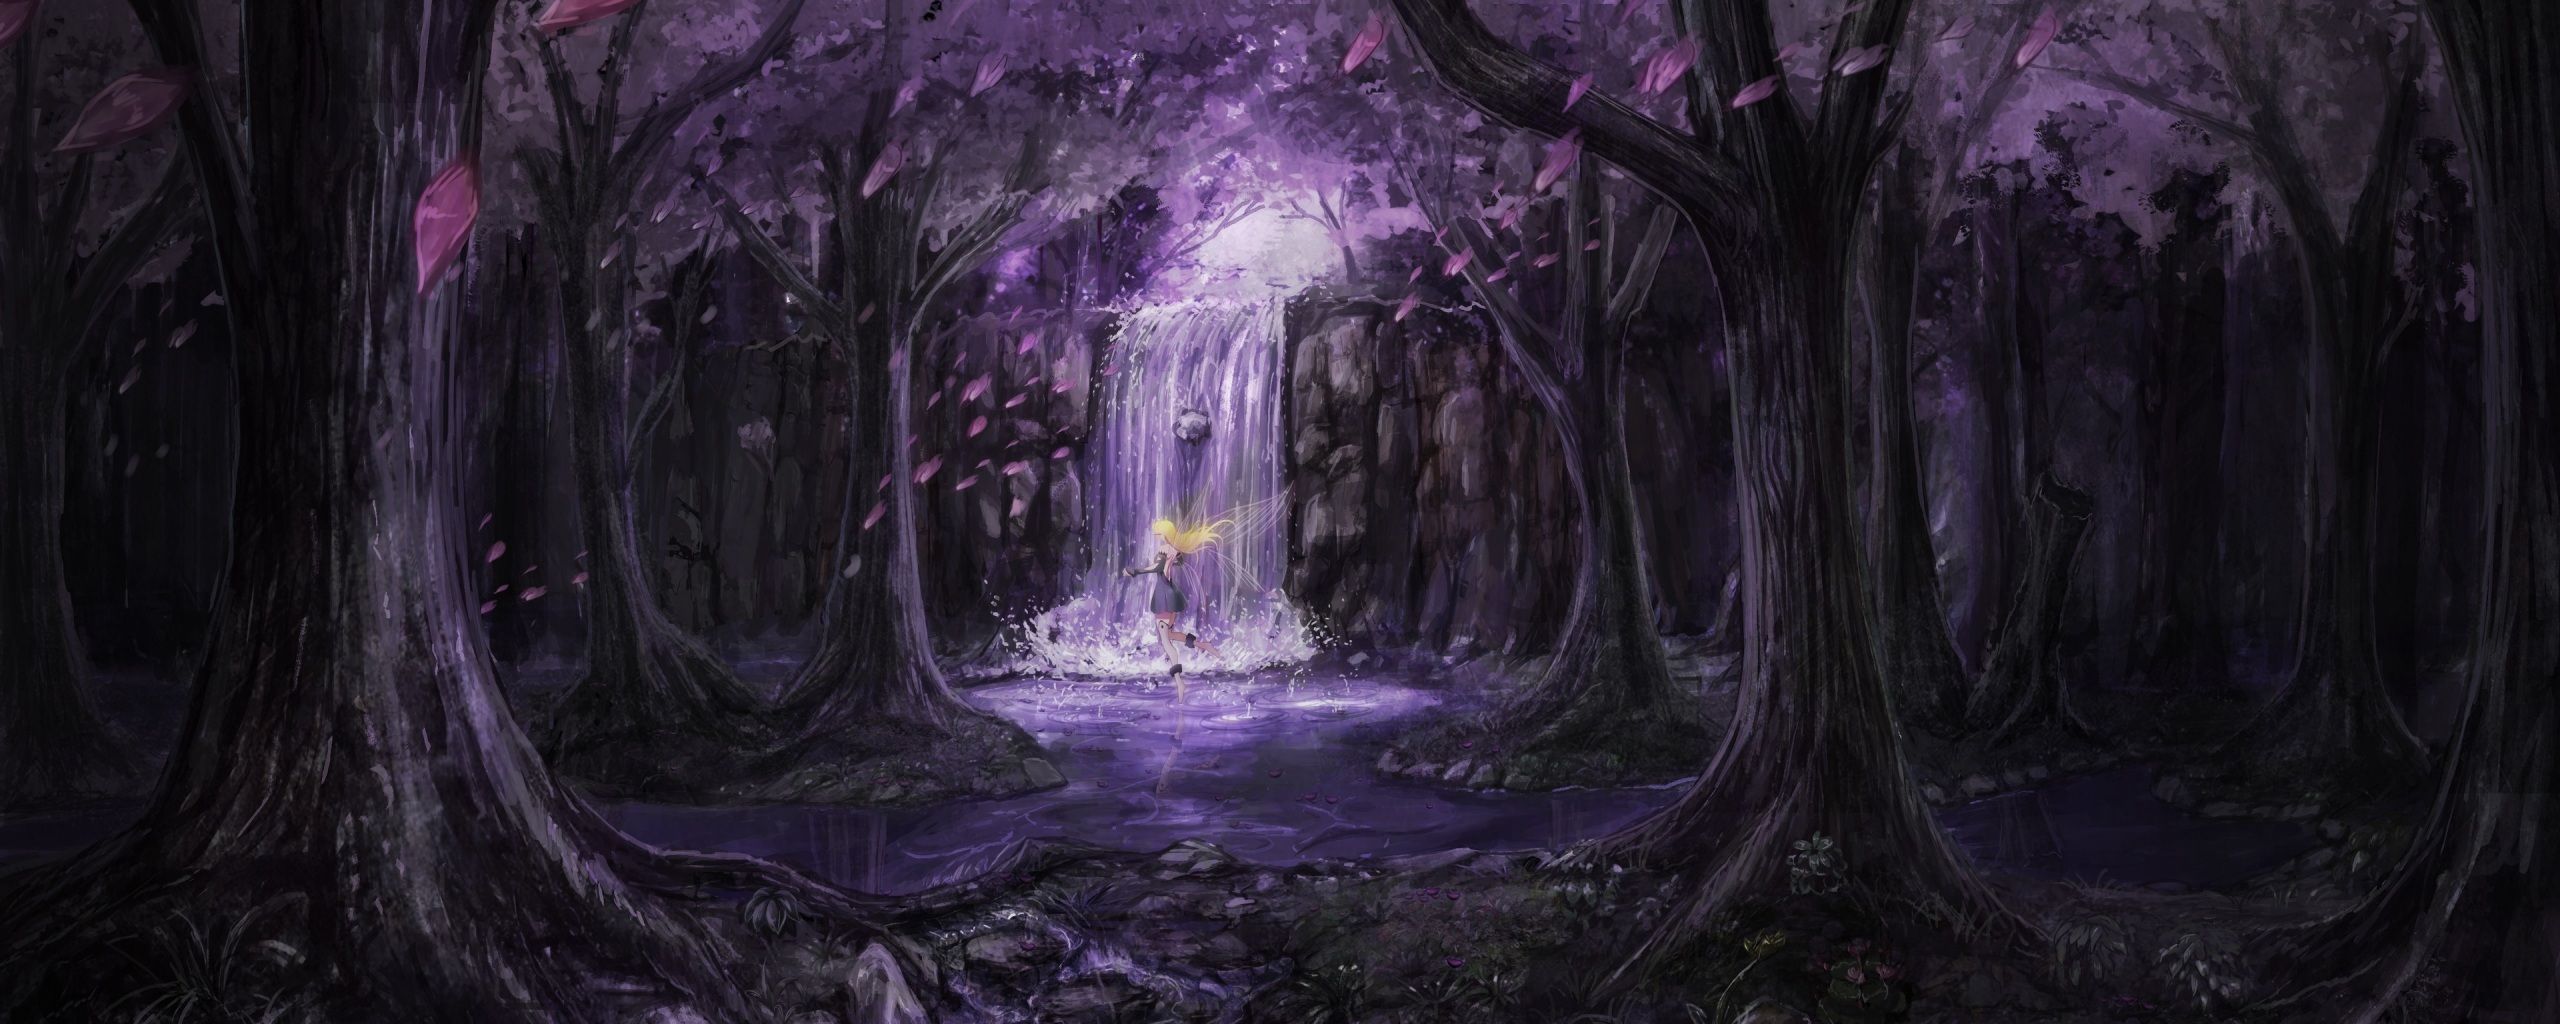 Anime Landscape 4k Wallpapers - Wallpaper Cave